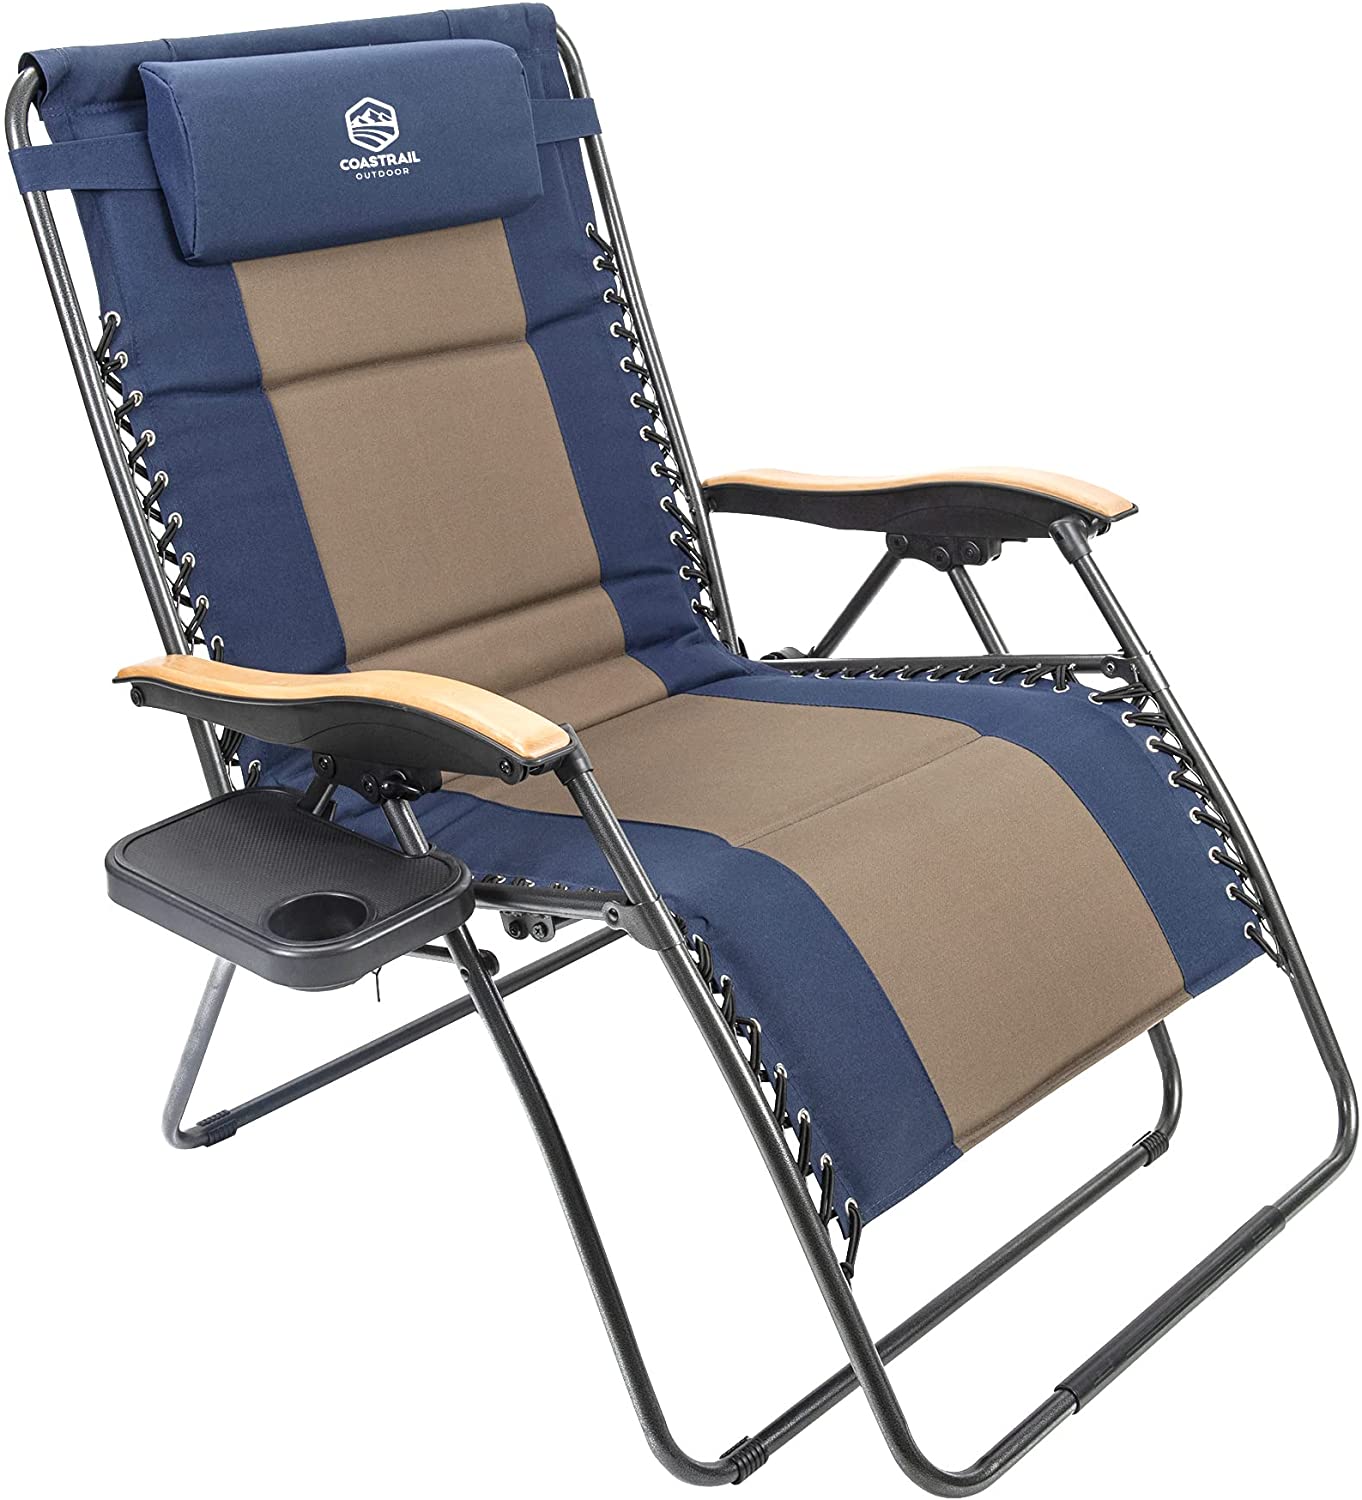 Coastrail Outdoor Zero Gravity Chair Wood Armrest